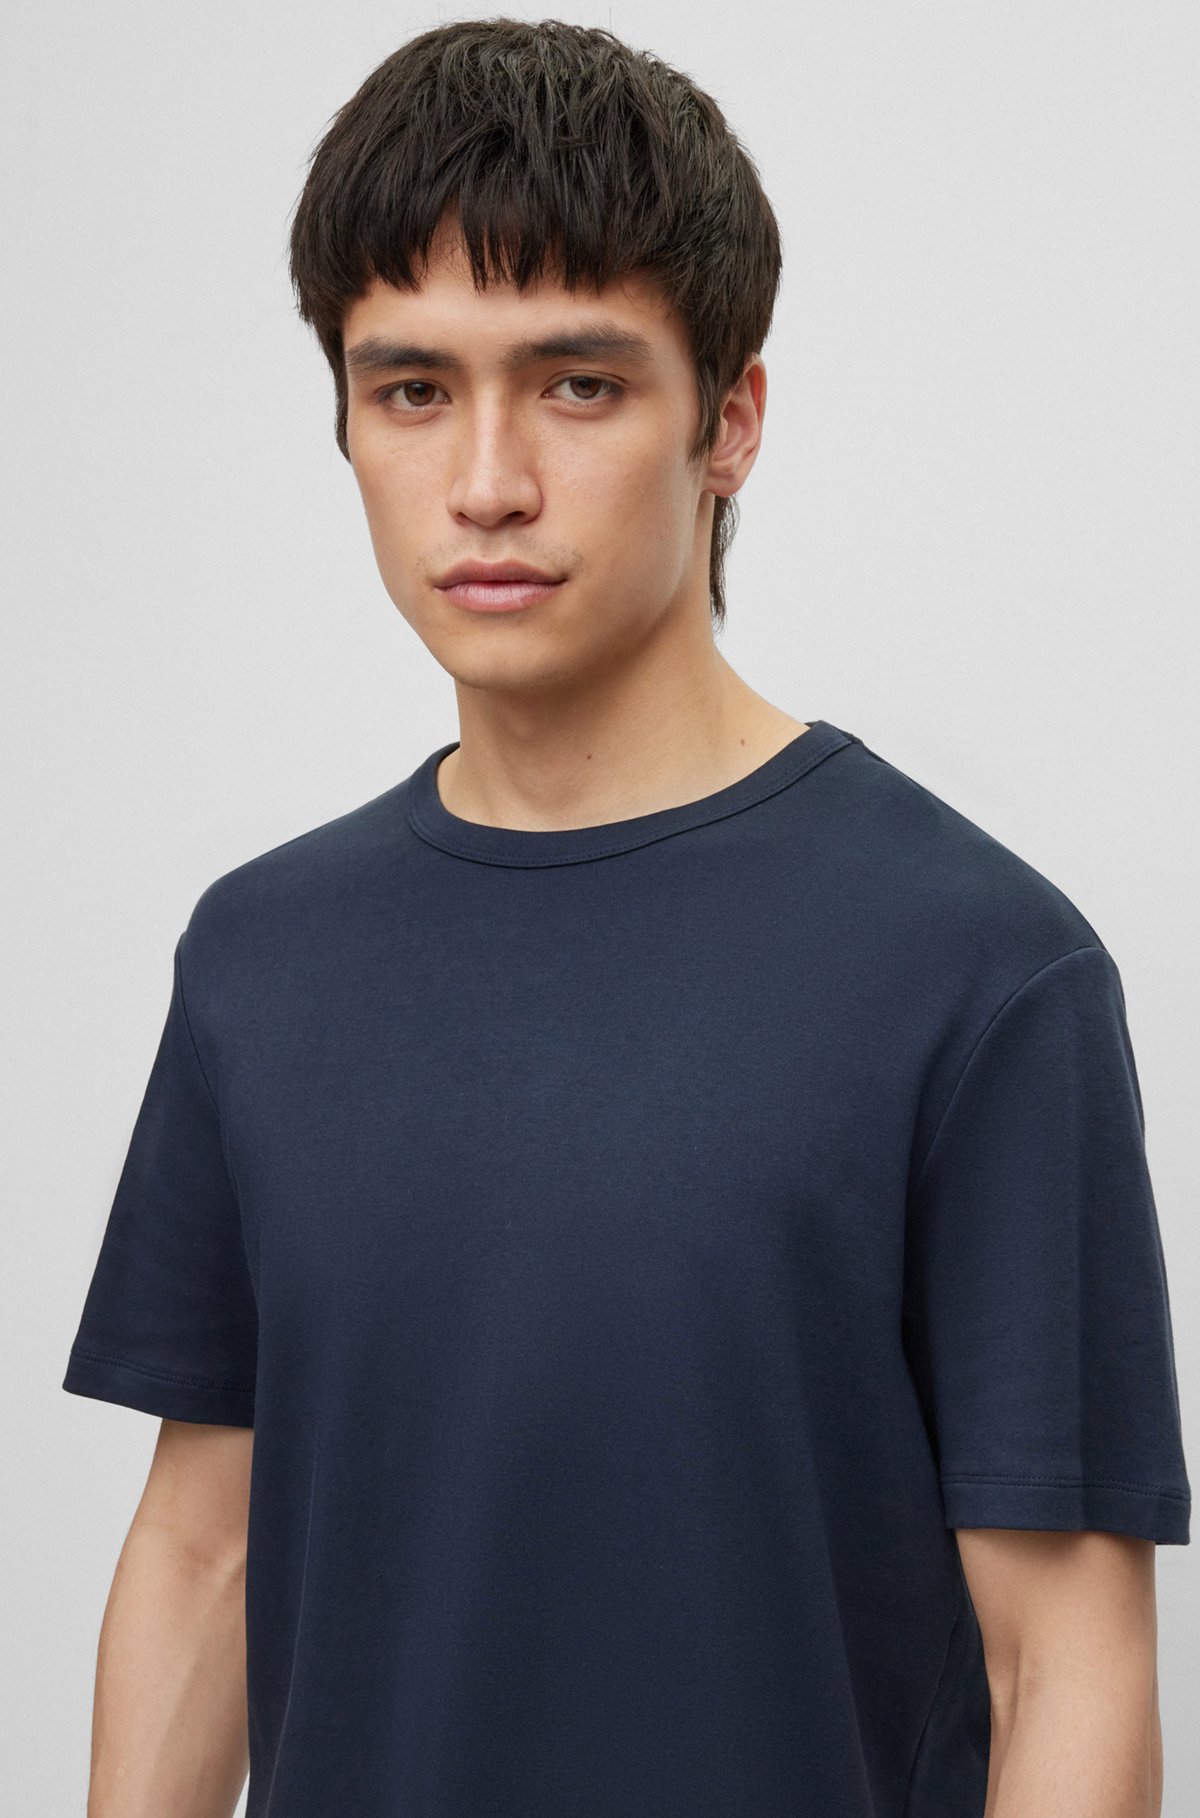 HUGO - Pima-cotton regular-fit T-shirt with contrast logo